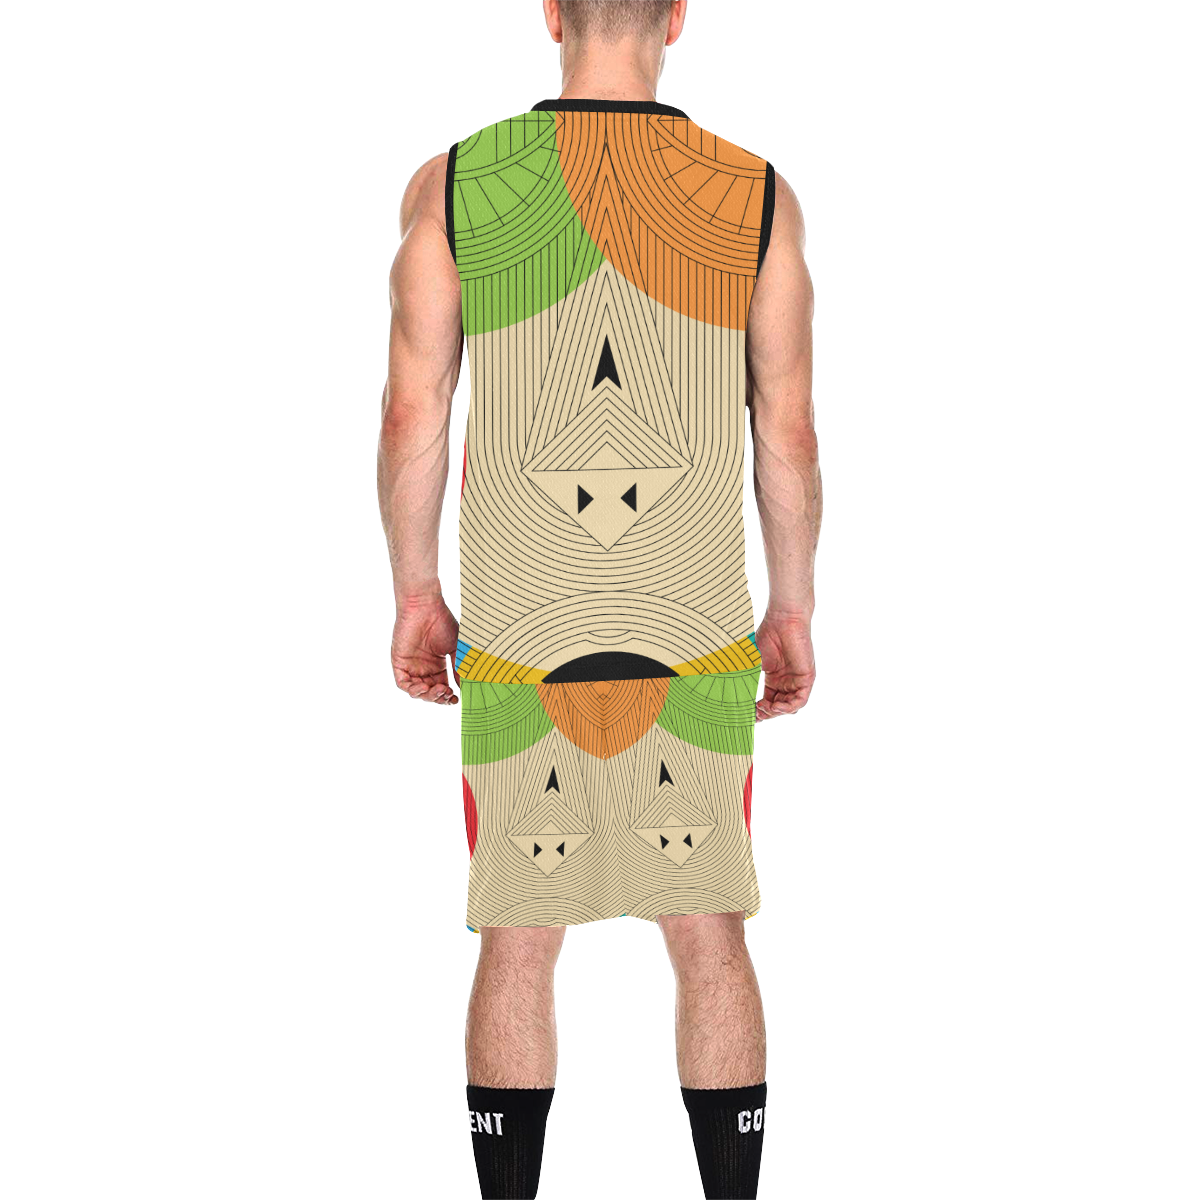 Aztec Ancient Tribal All Over Print Basketball Uniform